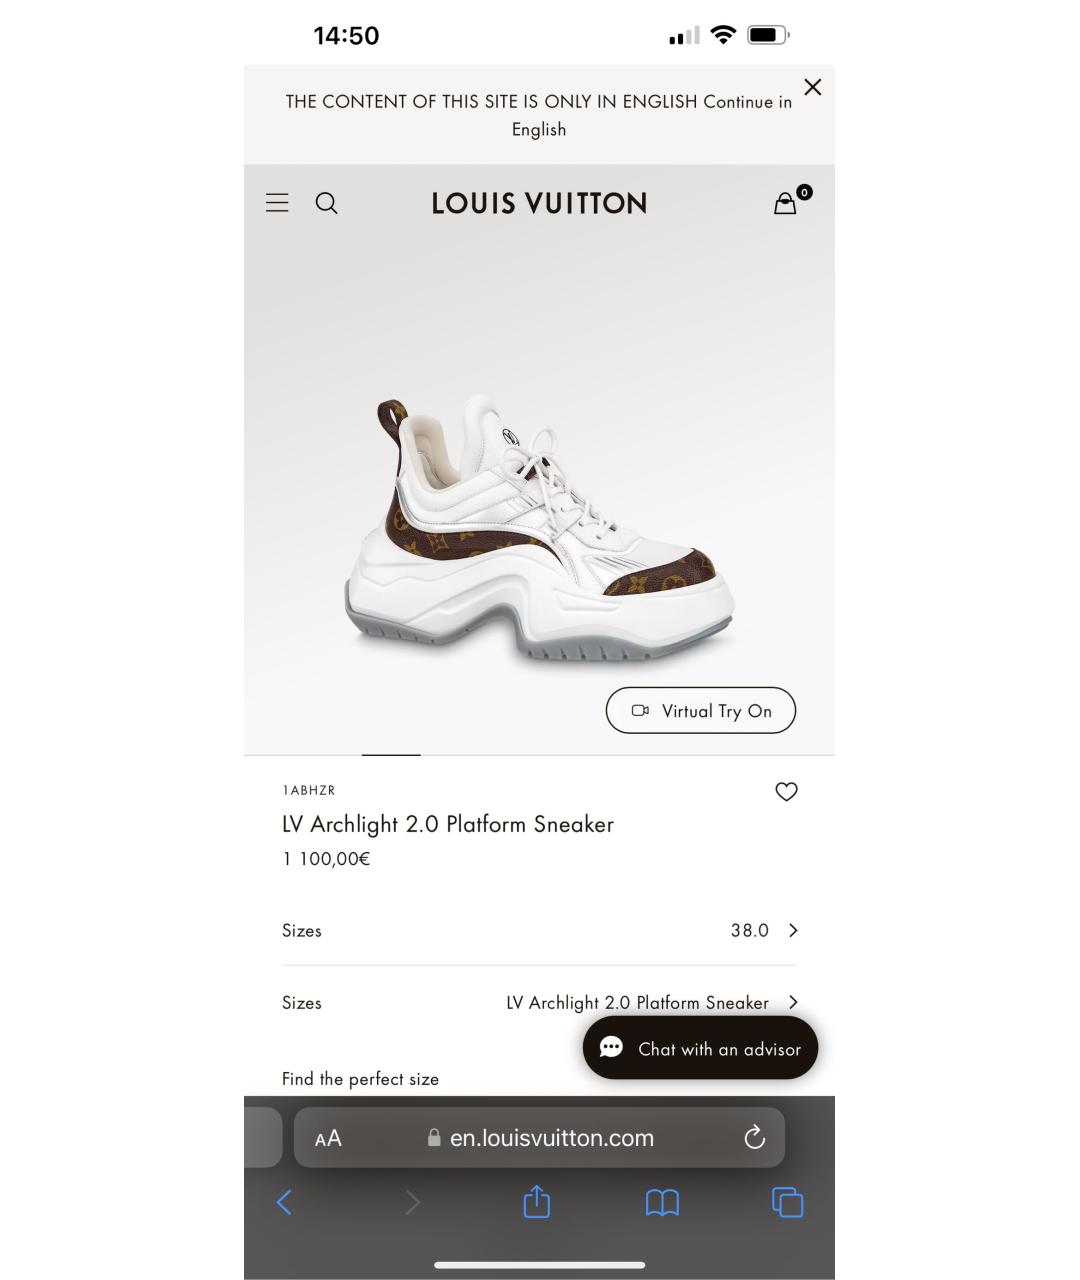 LV Archlight 2.0 Platform Sneaker - Shoes 1ABHZR